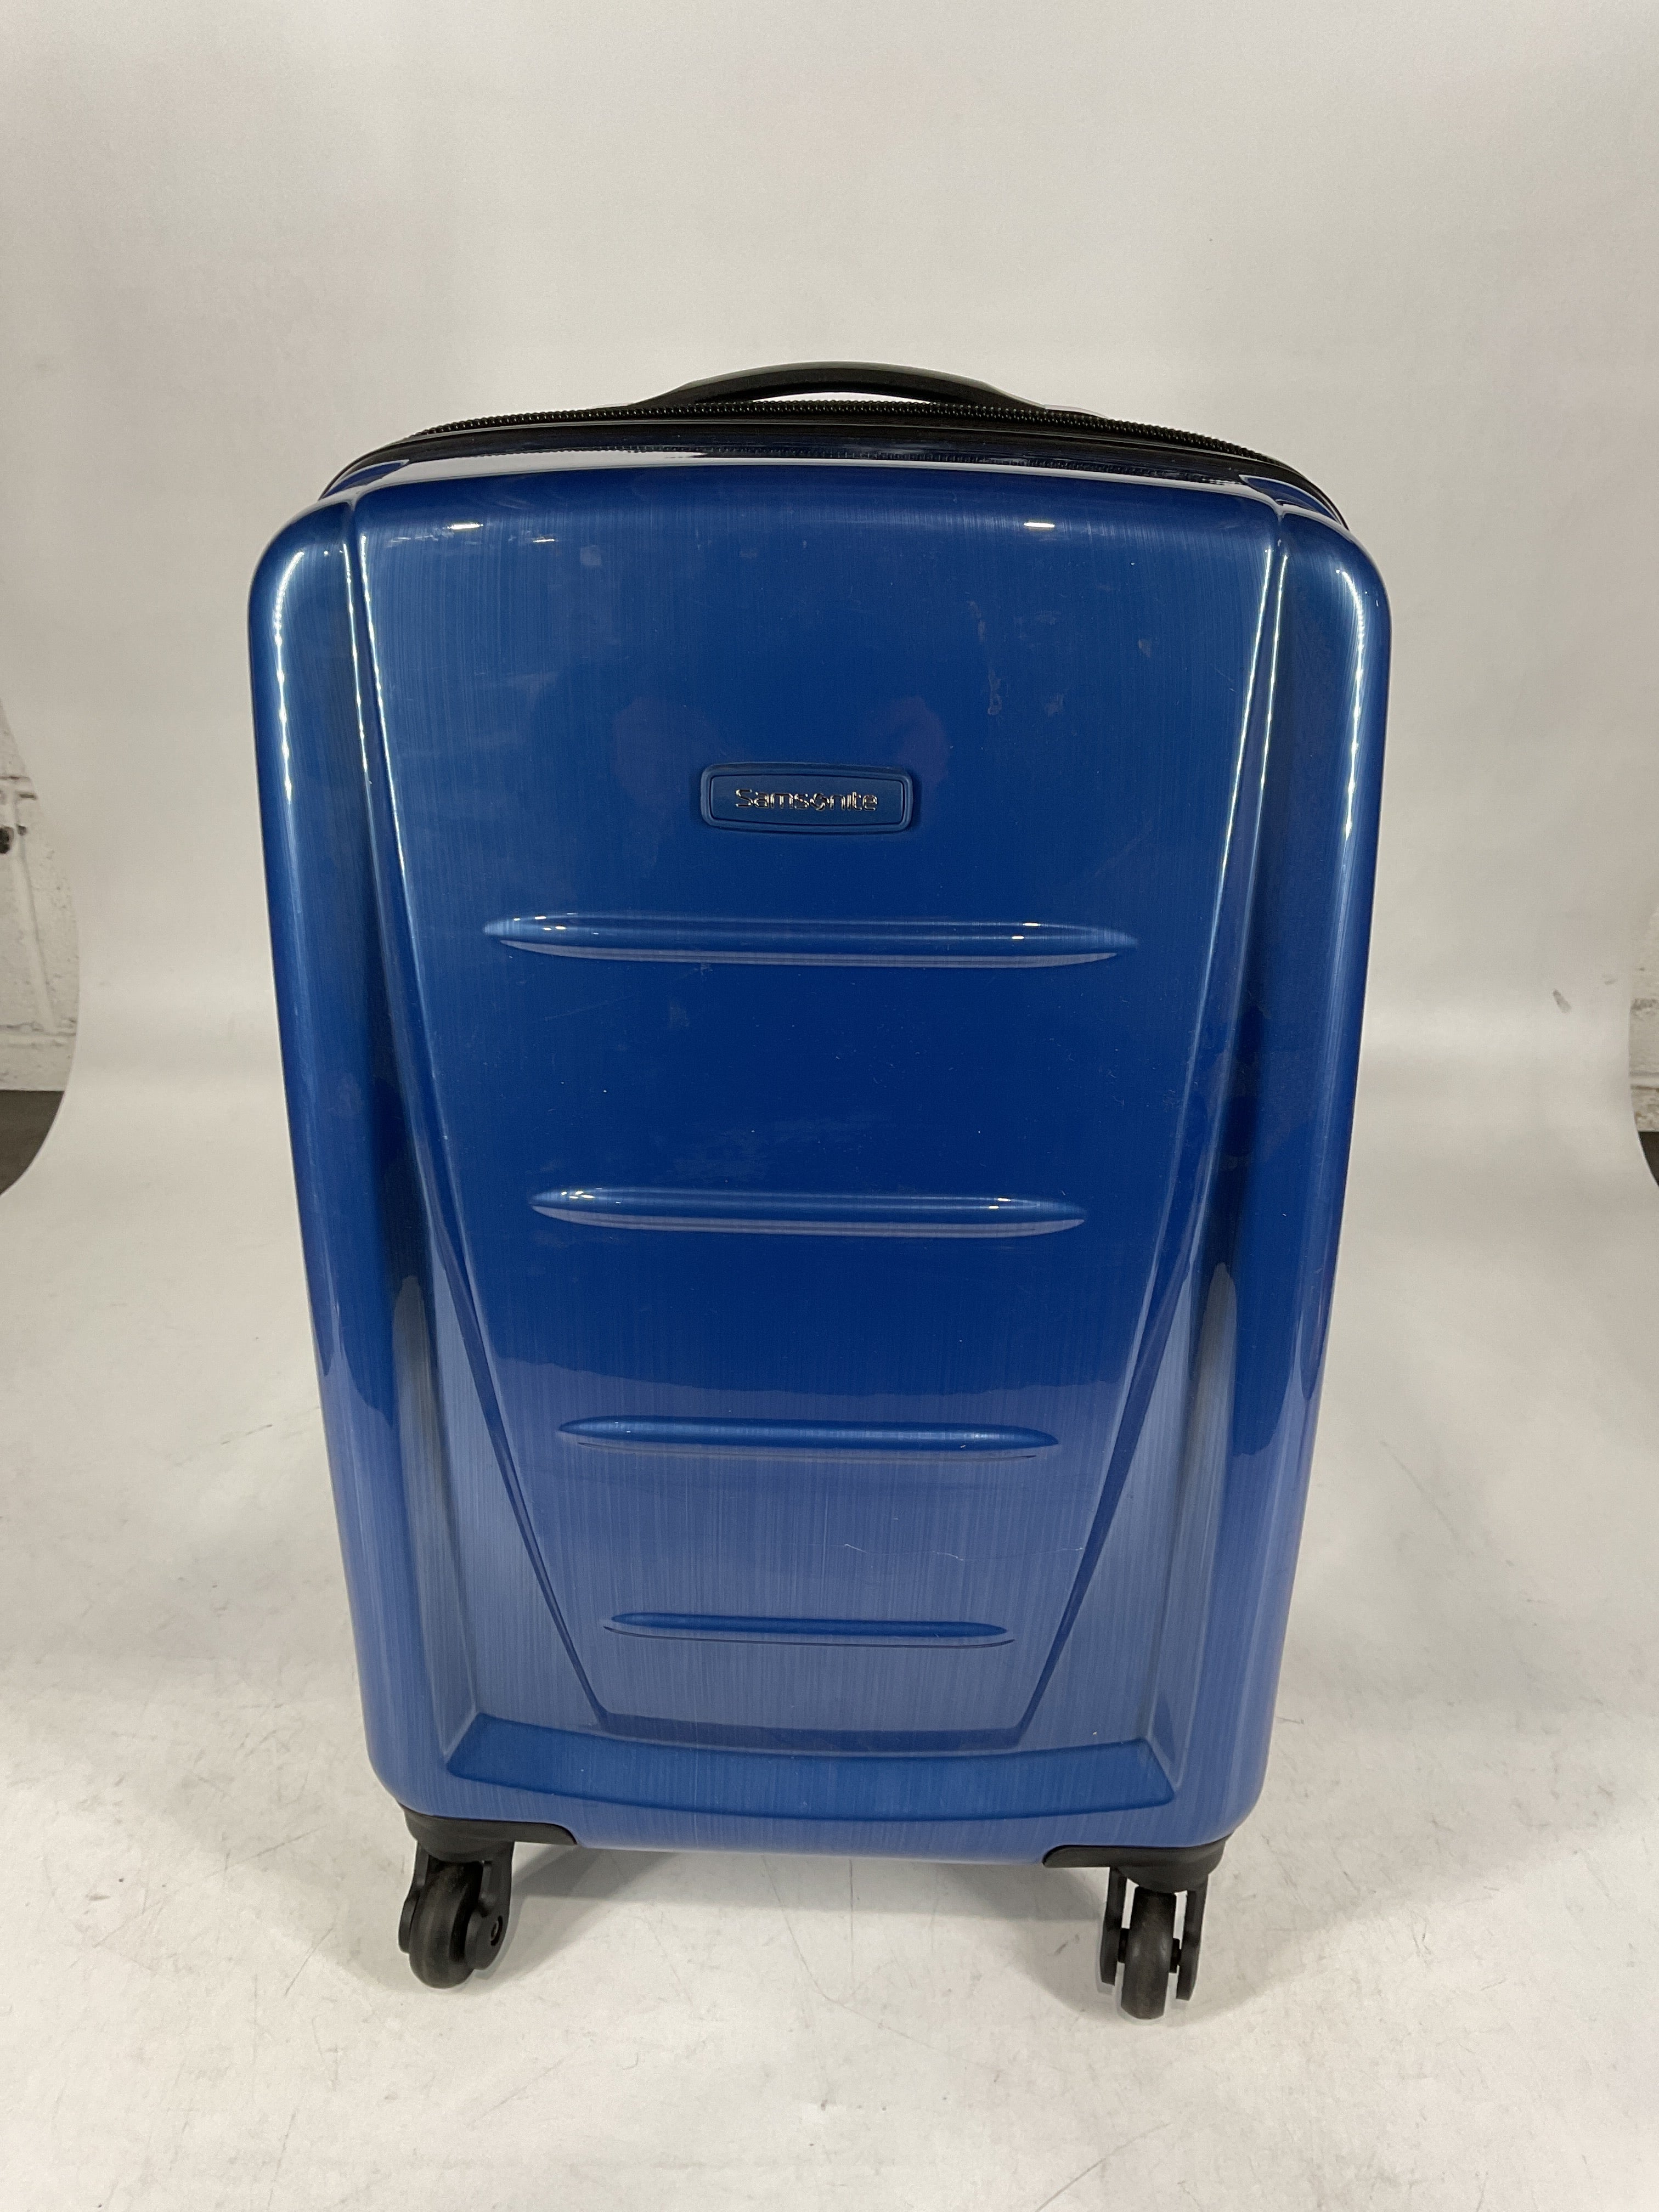 Samsonite Winfield 2 Hardside Luggage with Spinner Wheels U4